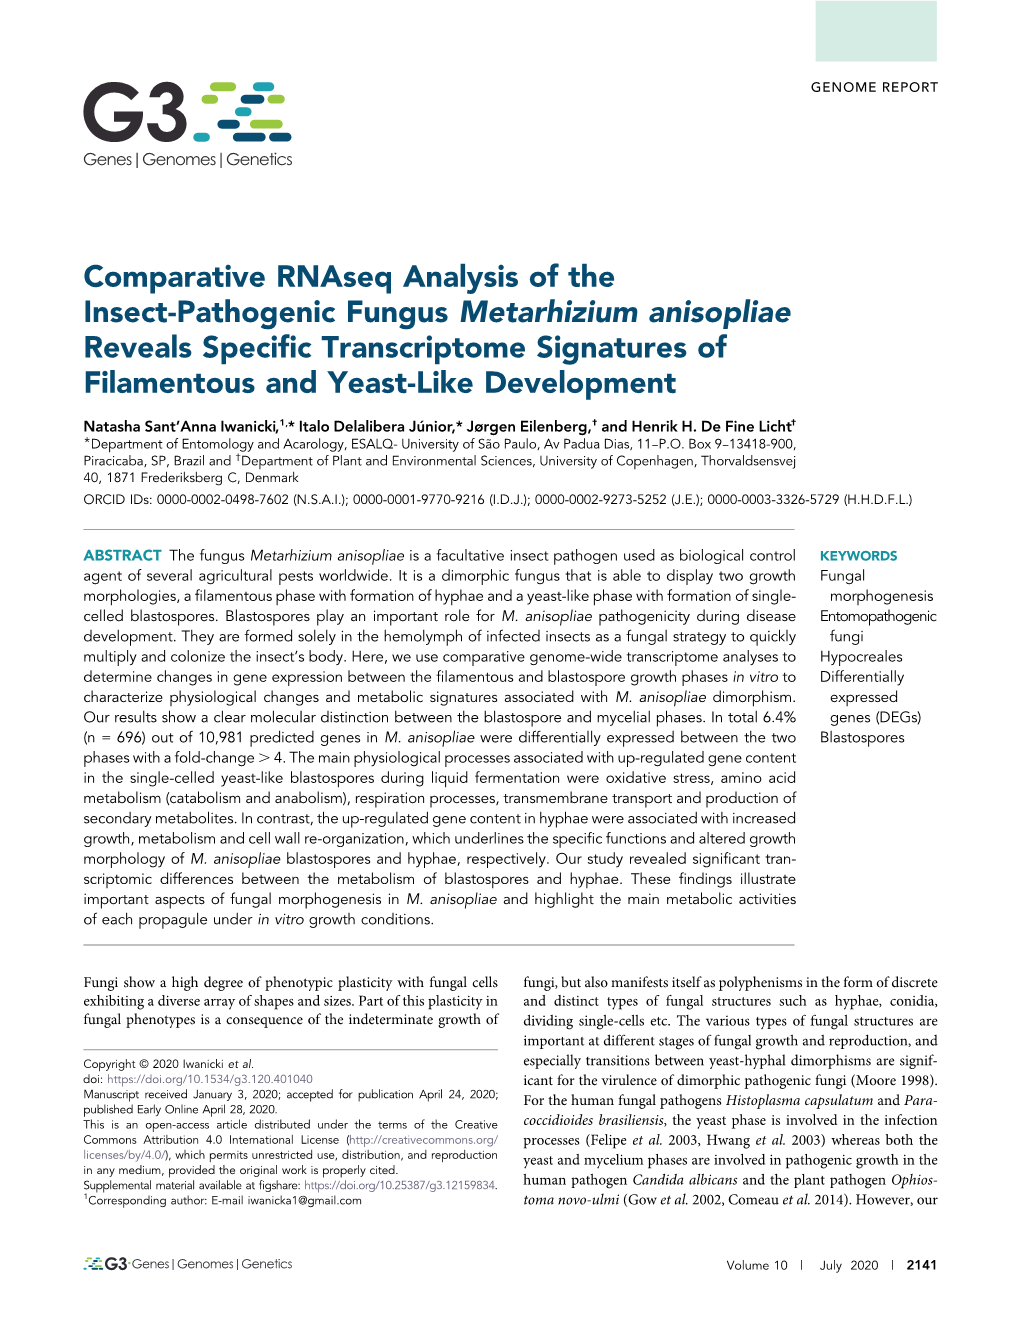 Comparative Rnaseq Analysis of the Insect-Pathogenic Fungus Metarhizium Anisopliae Reveals Speciﬁc Transcriptome Signatures of Filamentous and Yeast-Like Development